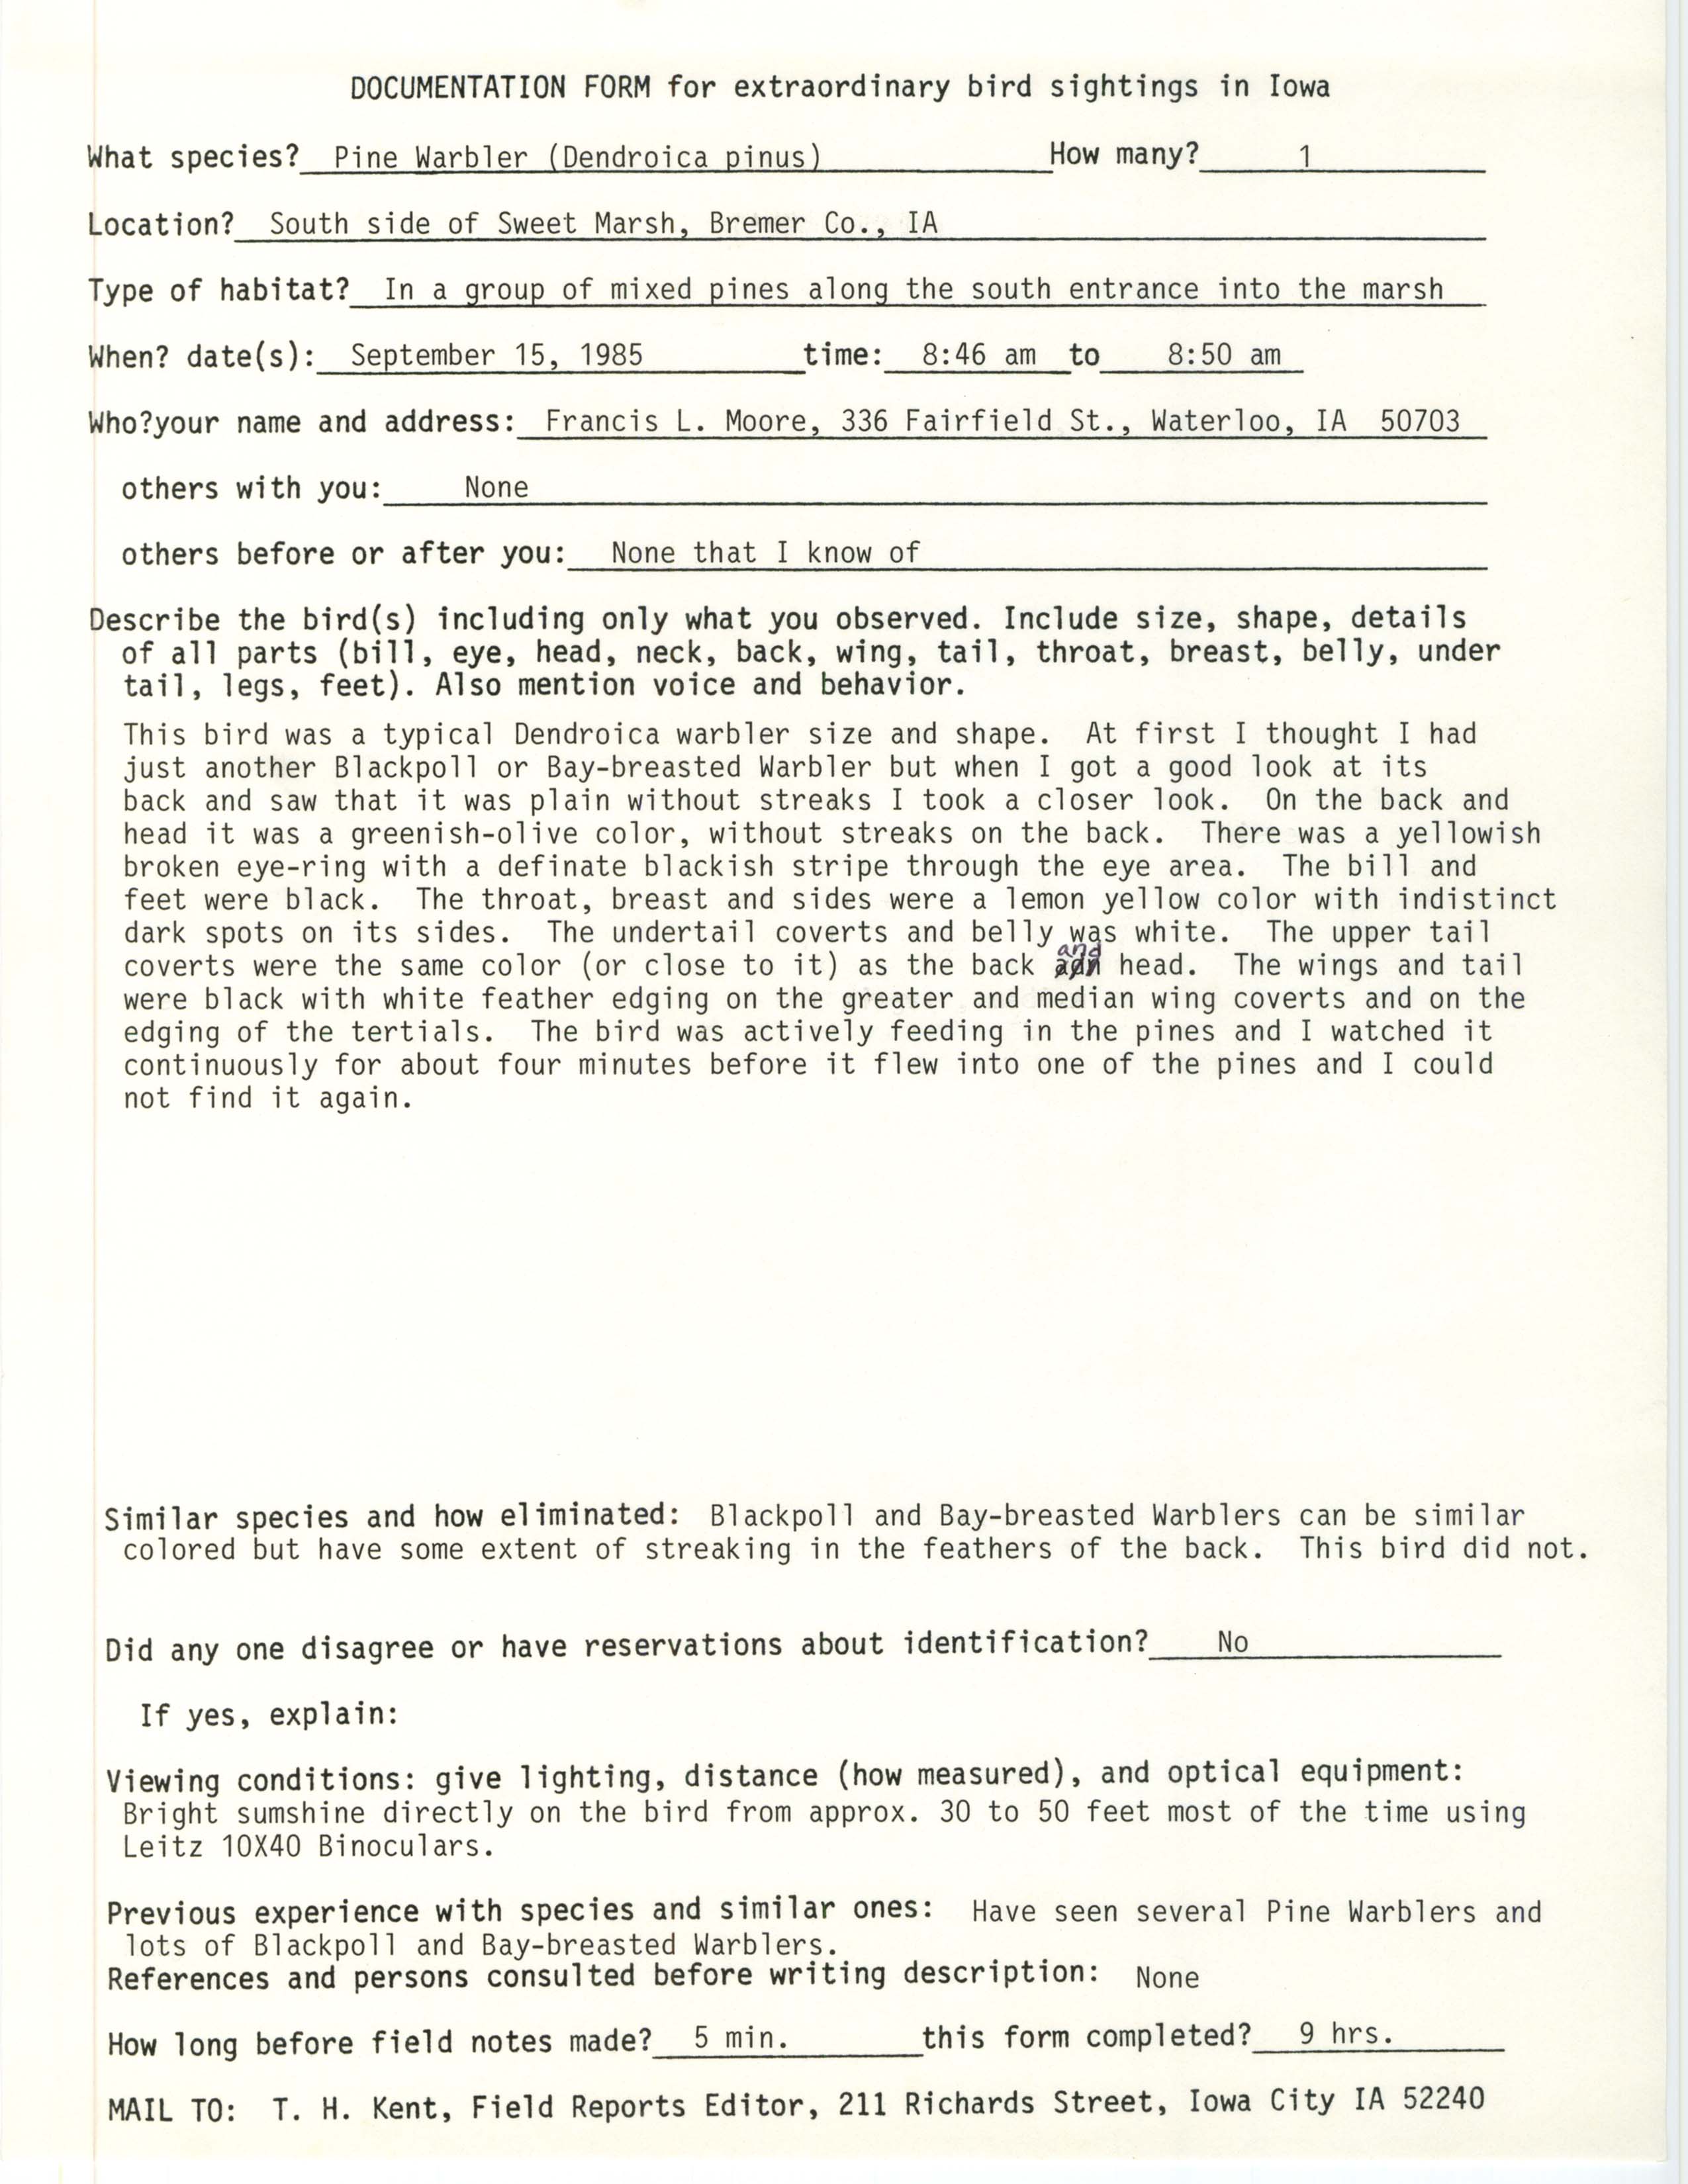 Rare bird documentation form for Pine Warbler at Sweet Marsh, 1985